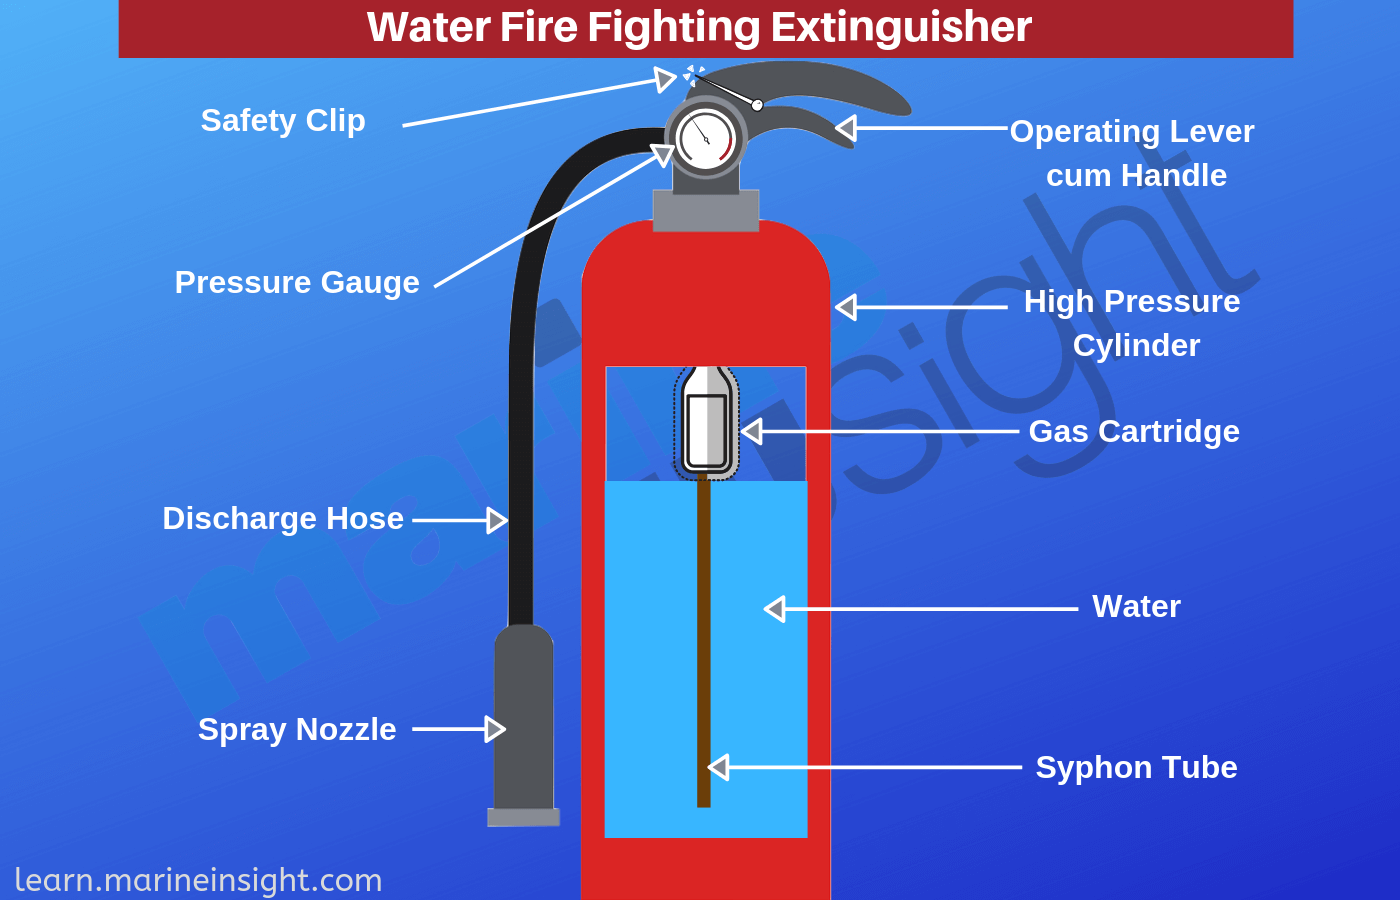 Water Fire extinguisher 